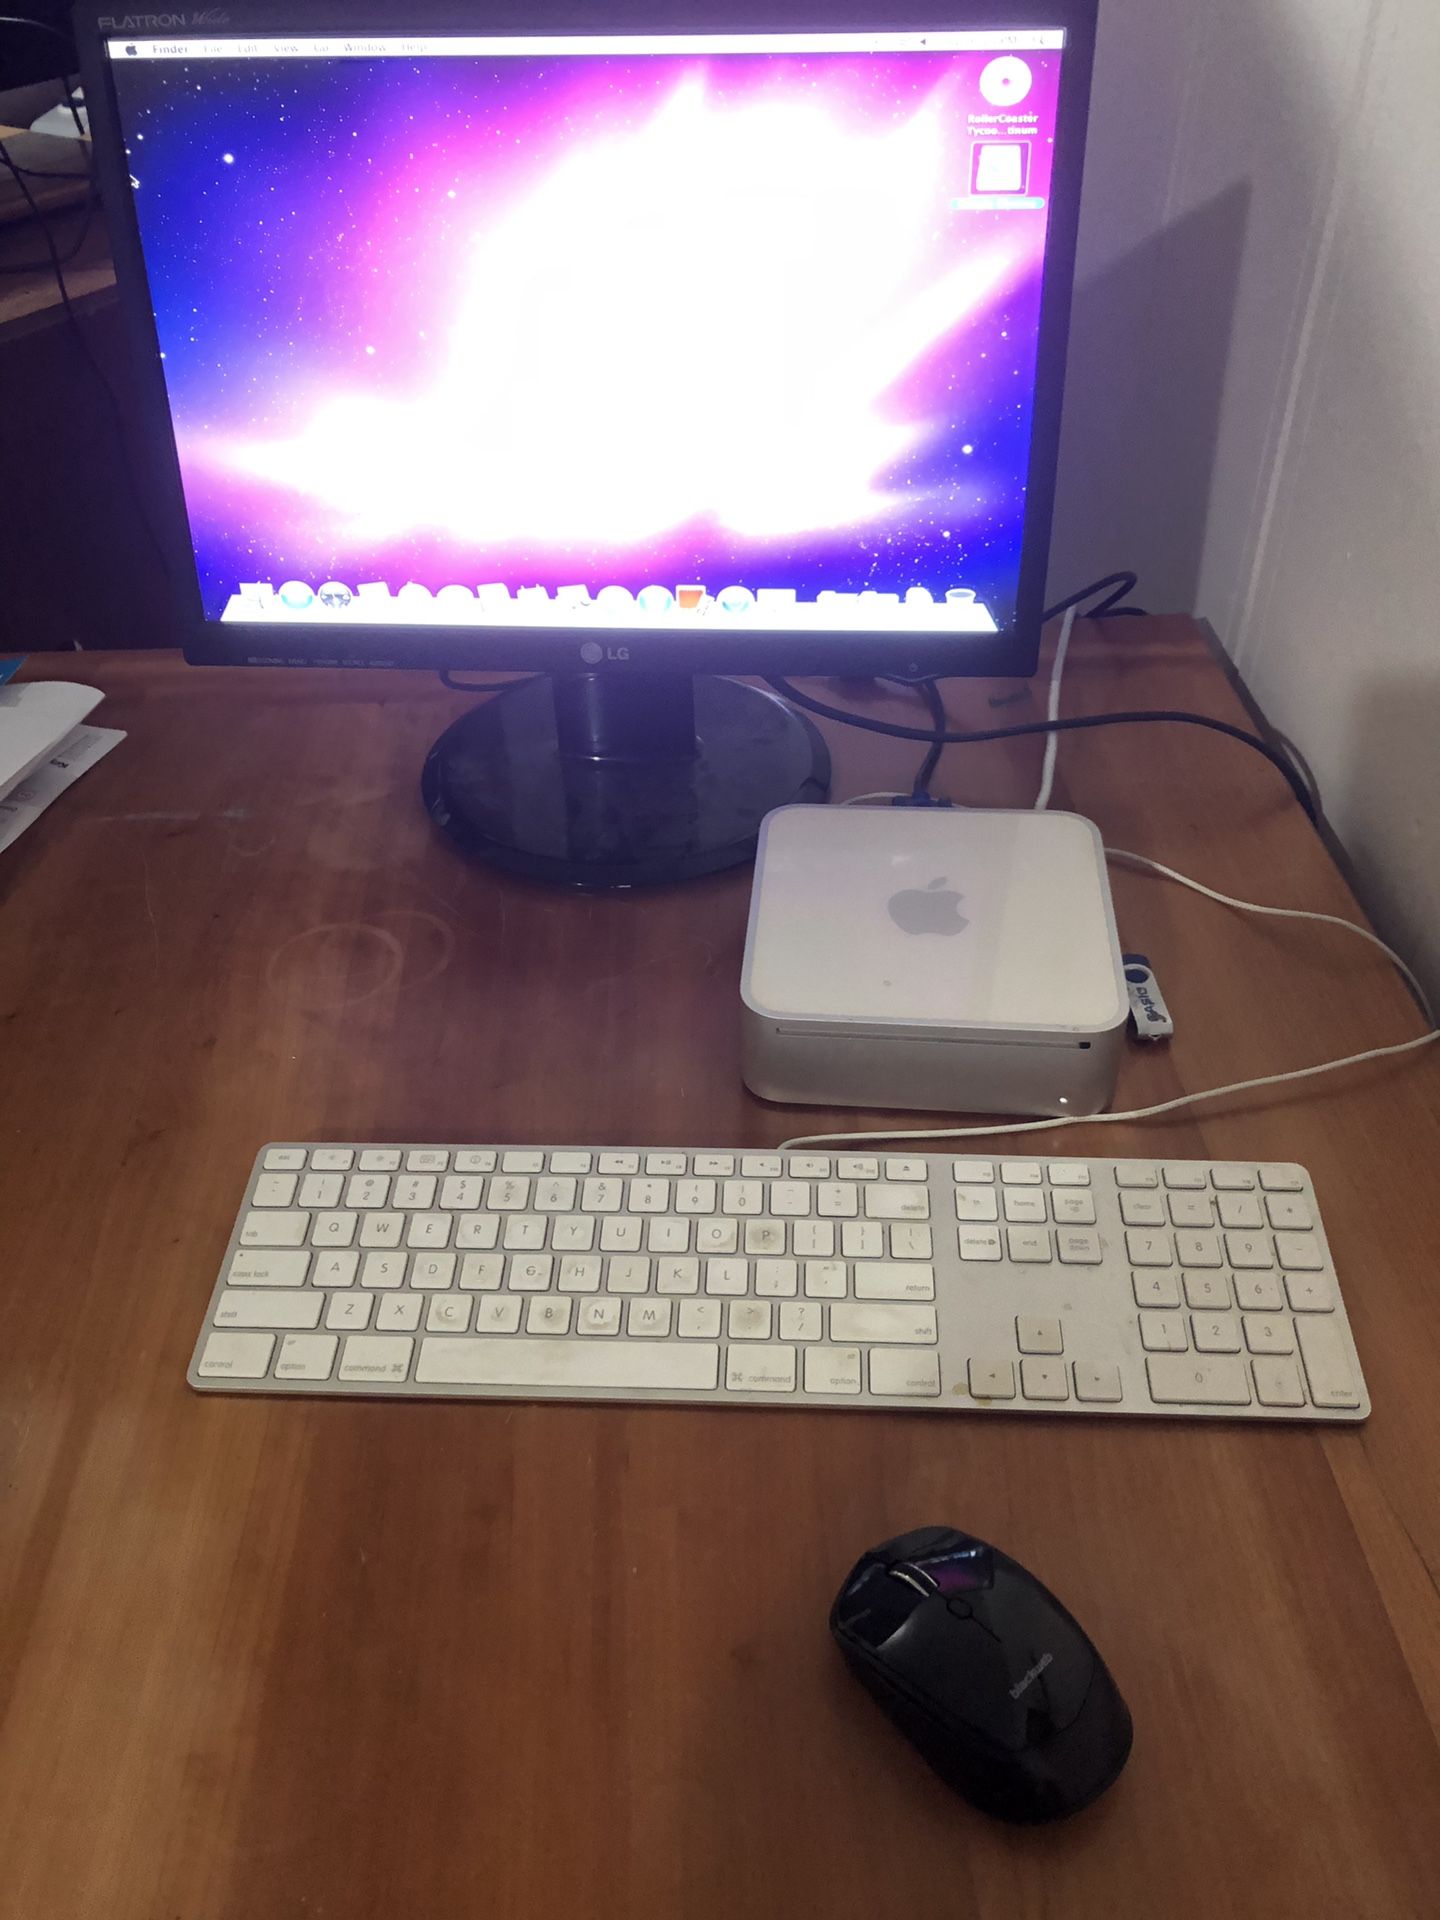 Apple/Mac Mini Computer